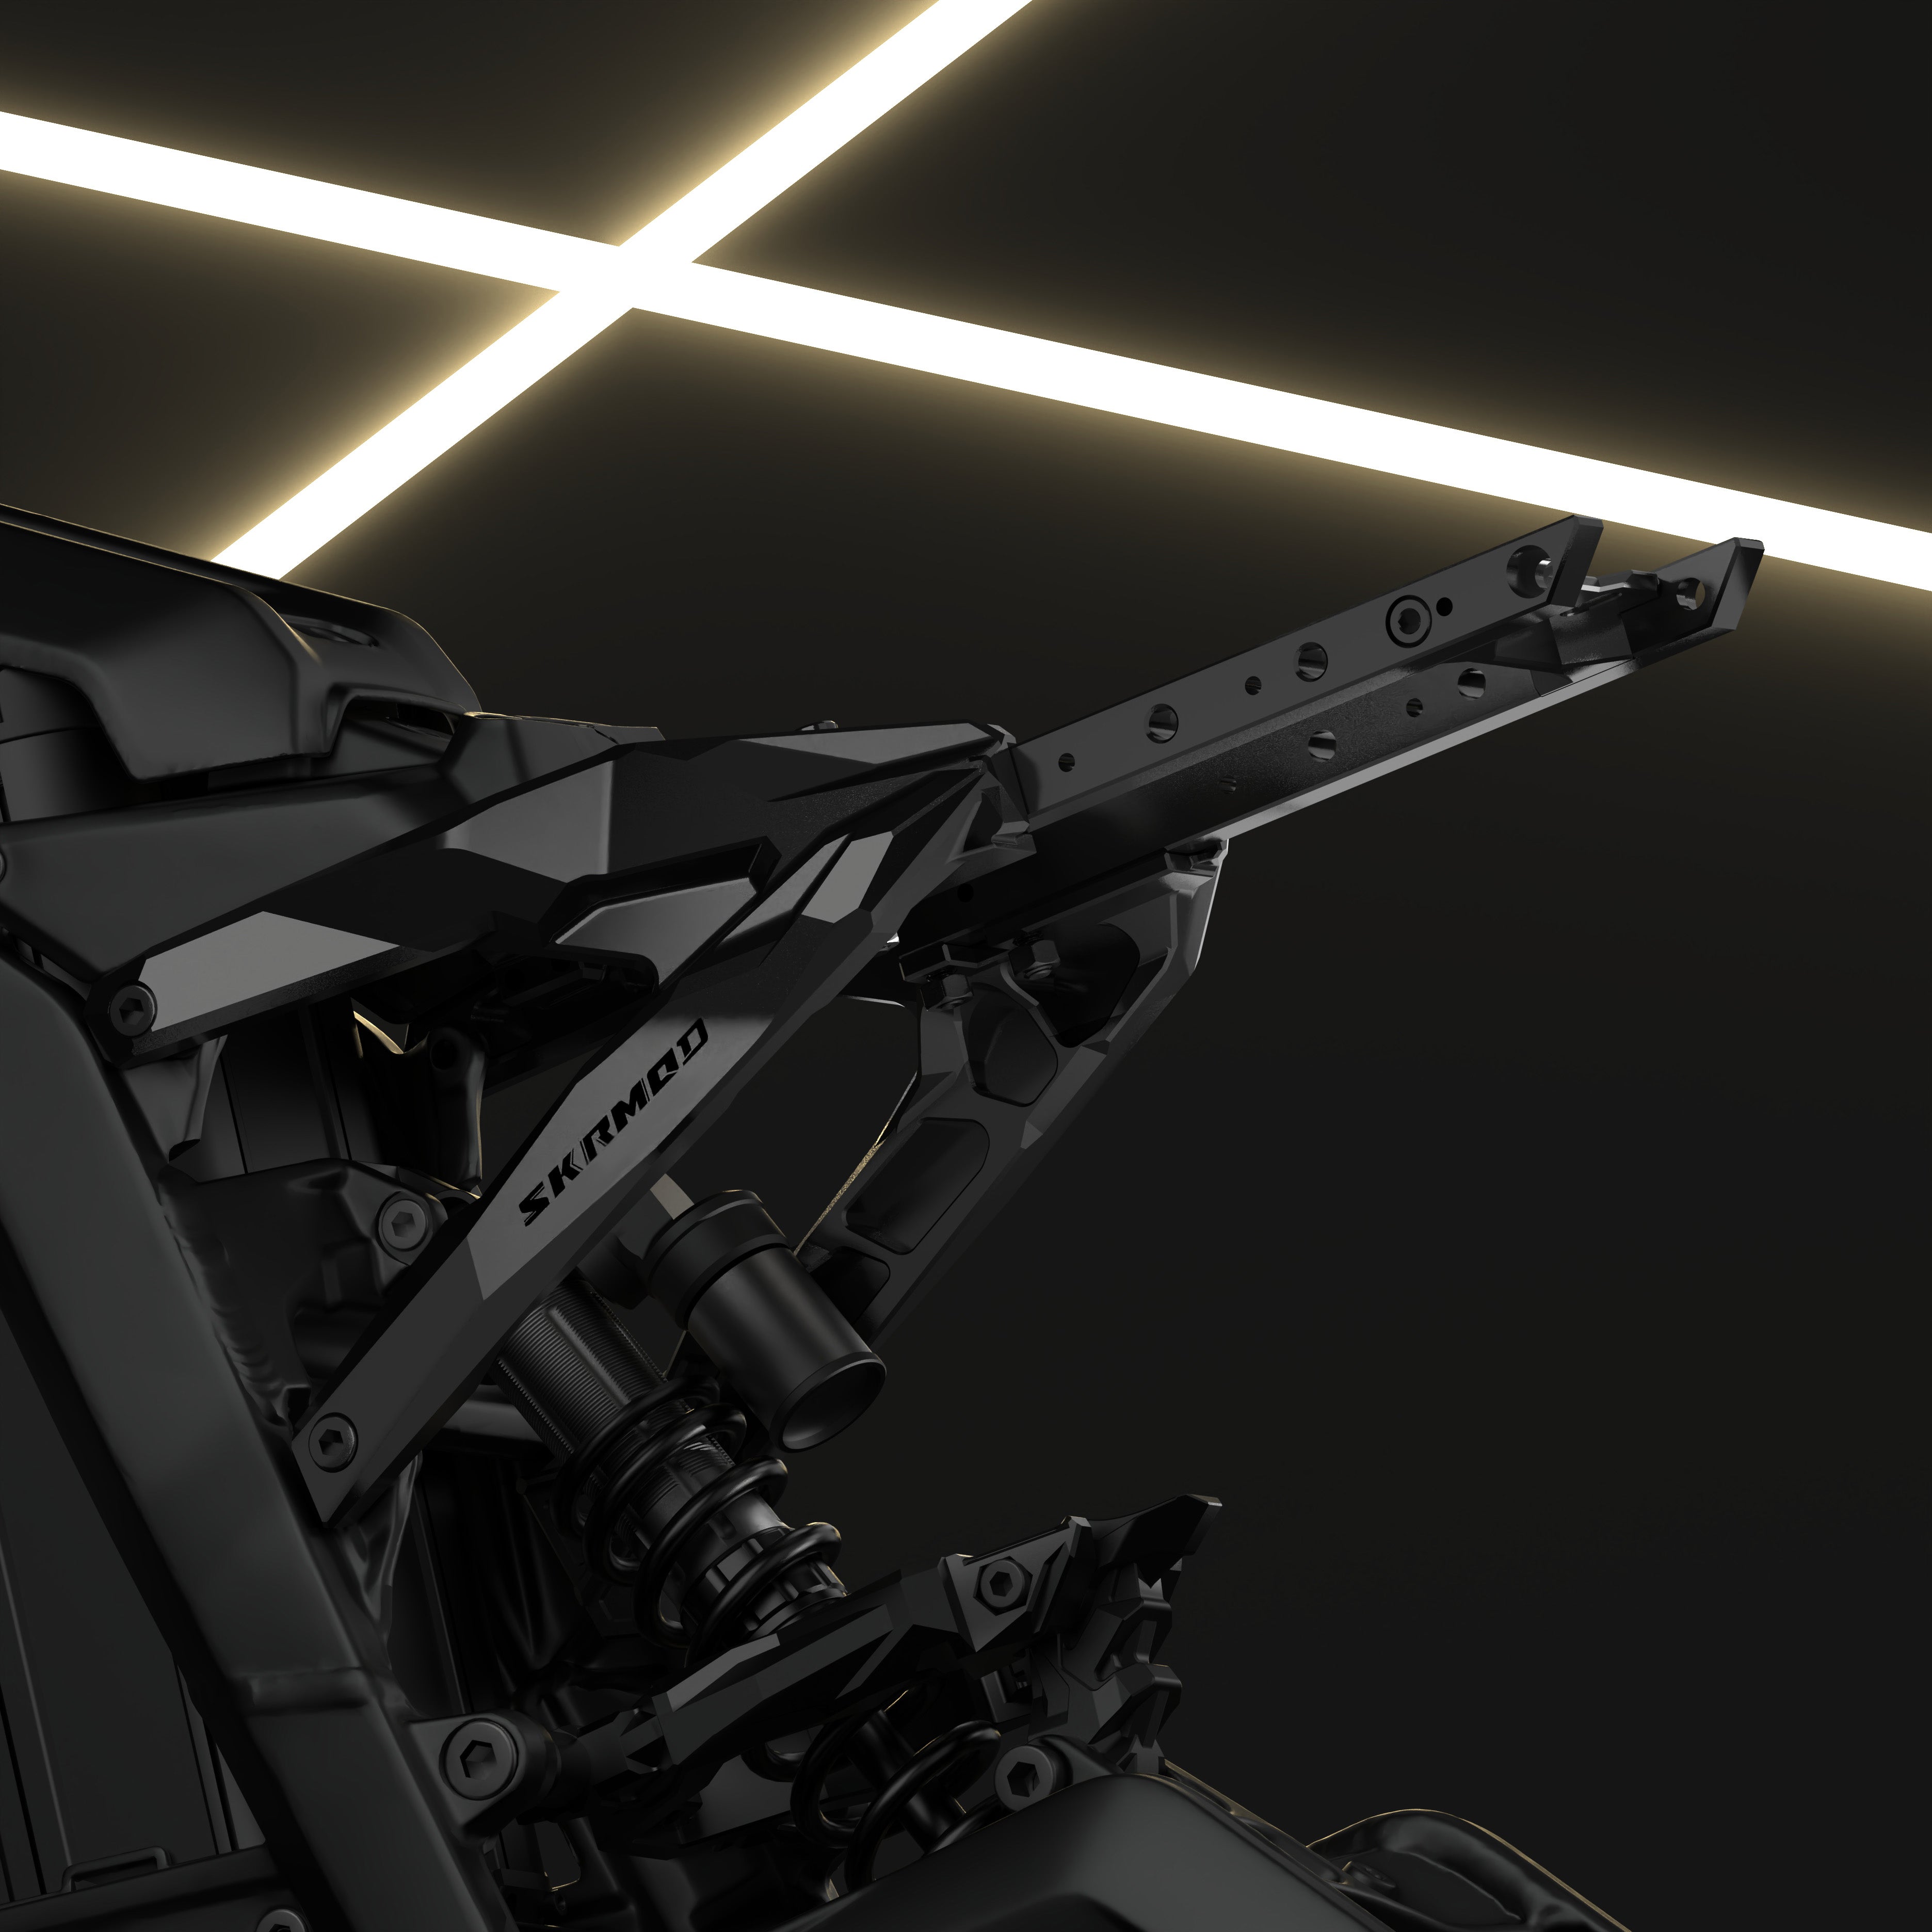 [Limited Edition] Skrmod Sur-Ron LBX Upgraded Subframe - Black Knight Version with Titanium Bolts